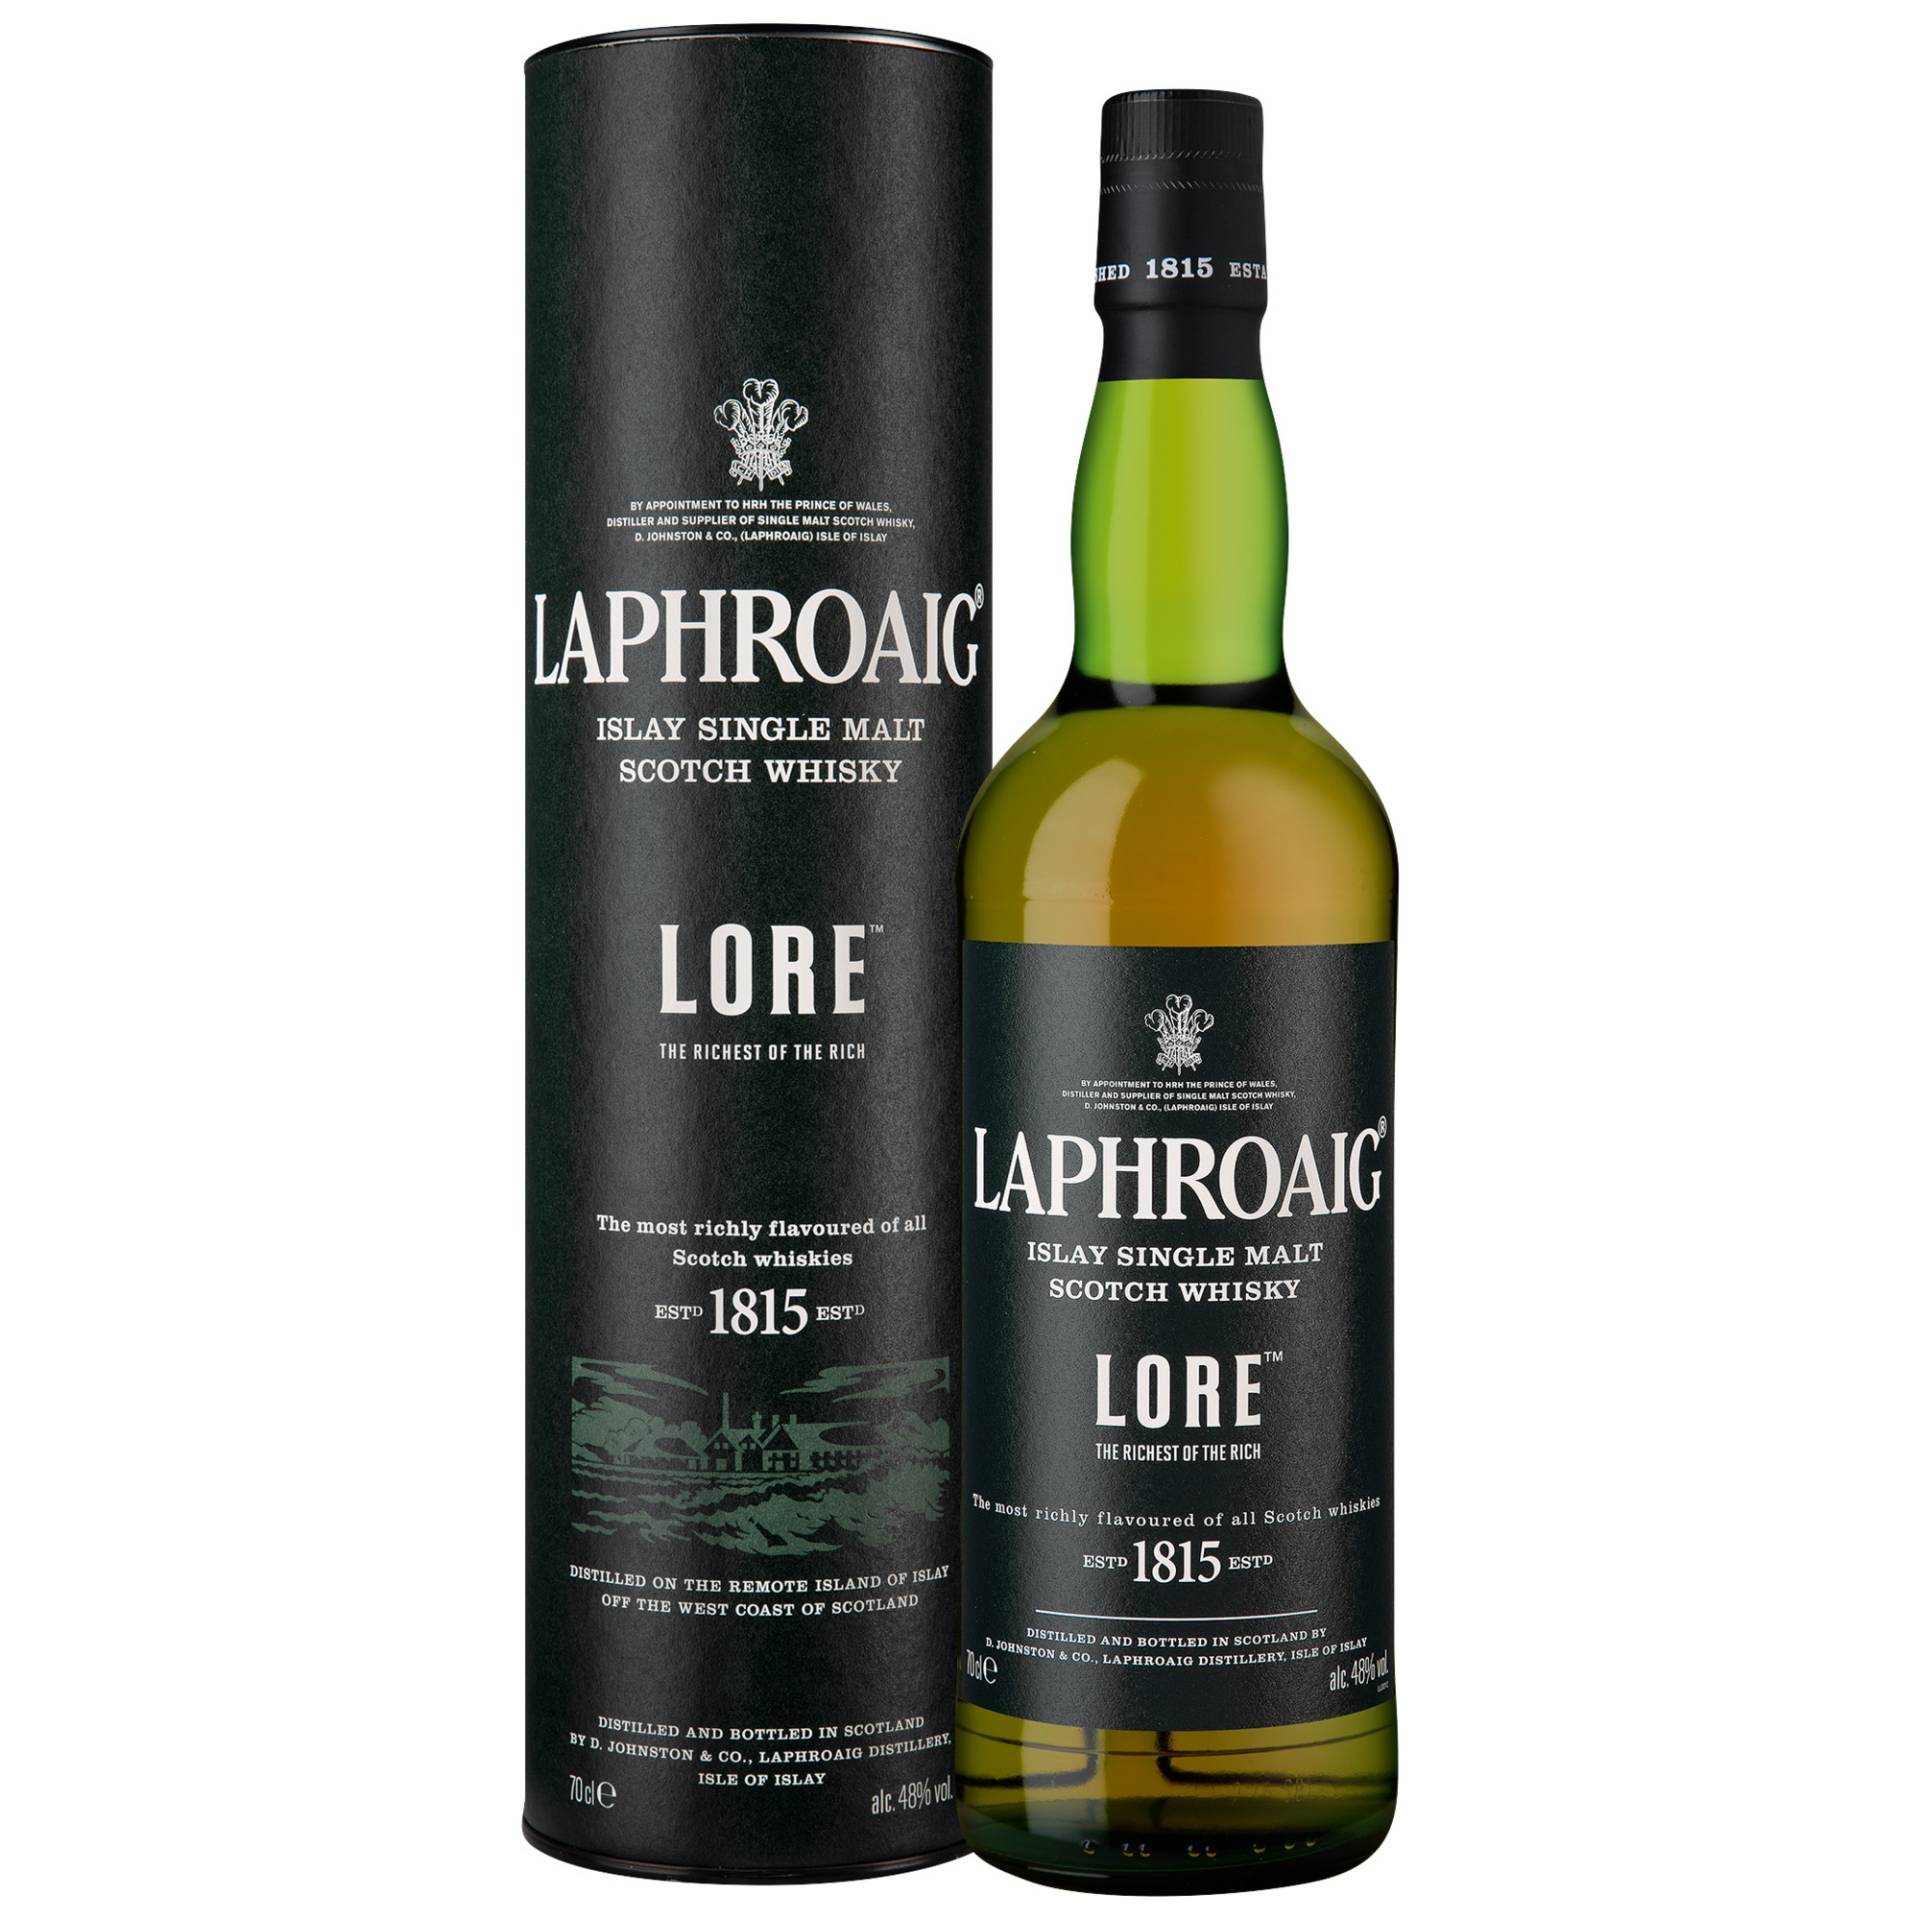 Laphroaig Lore Islay Single Malt Scotch Whisky, 0,7 L, 48% Vol., Schottland, Spirituosen von D. Johnston & Company (Laphroaig) Ltd, Springburn Bond, Carlisle St, Glasgow G21 1EQ, Scotland